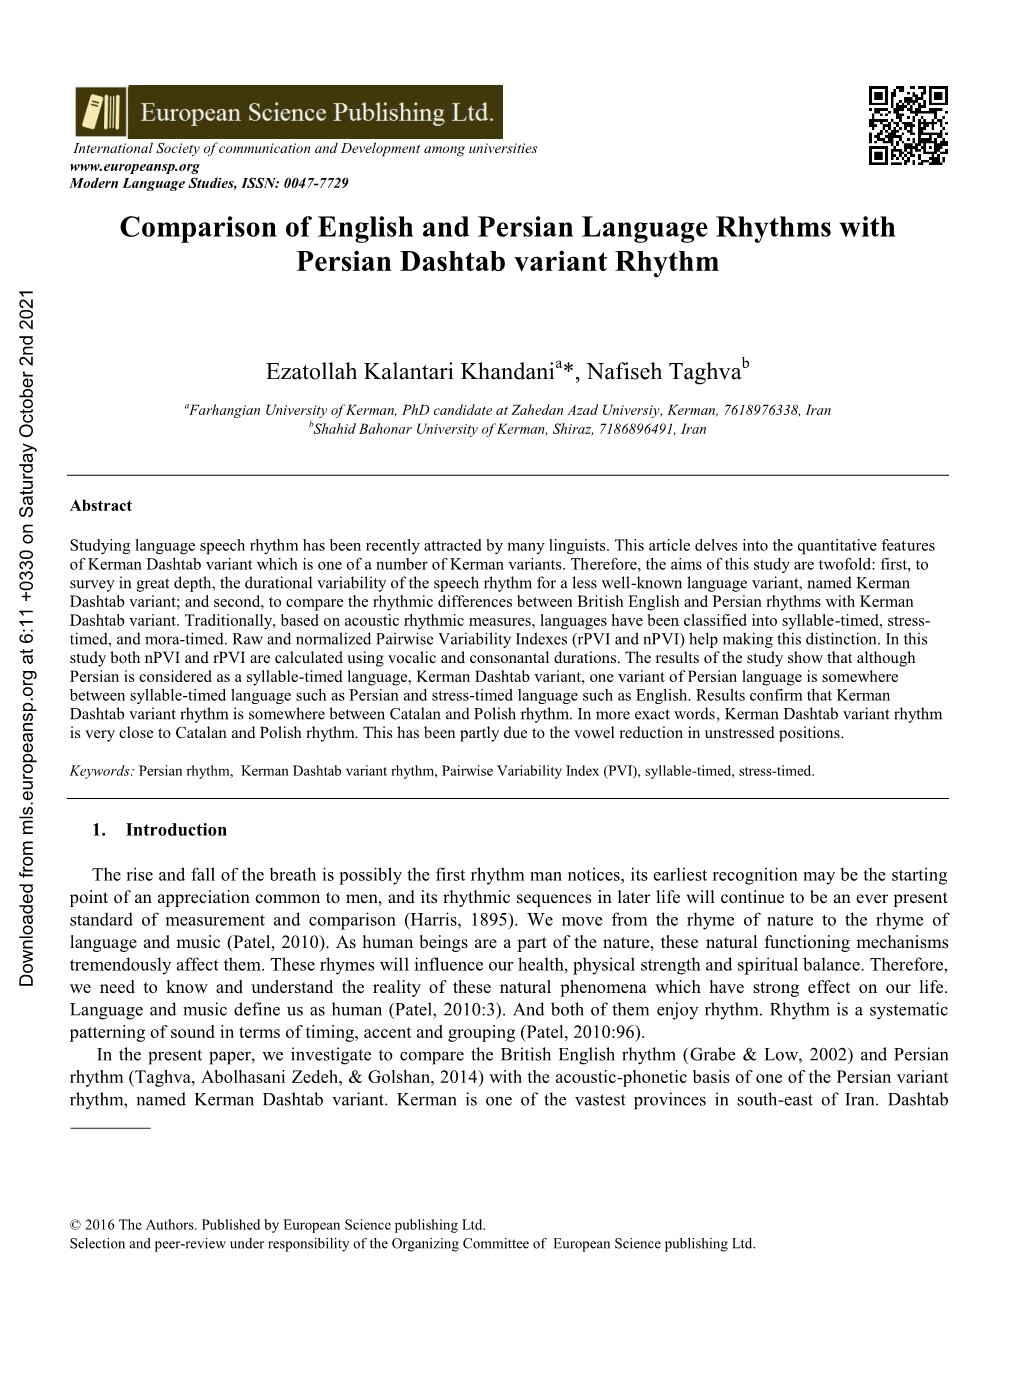 Comparison of English and Persian Language Rhythms with Persian Dashtab Variant Rhythm